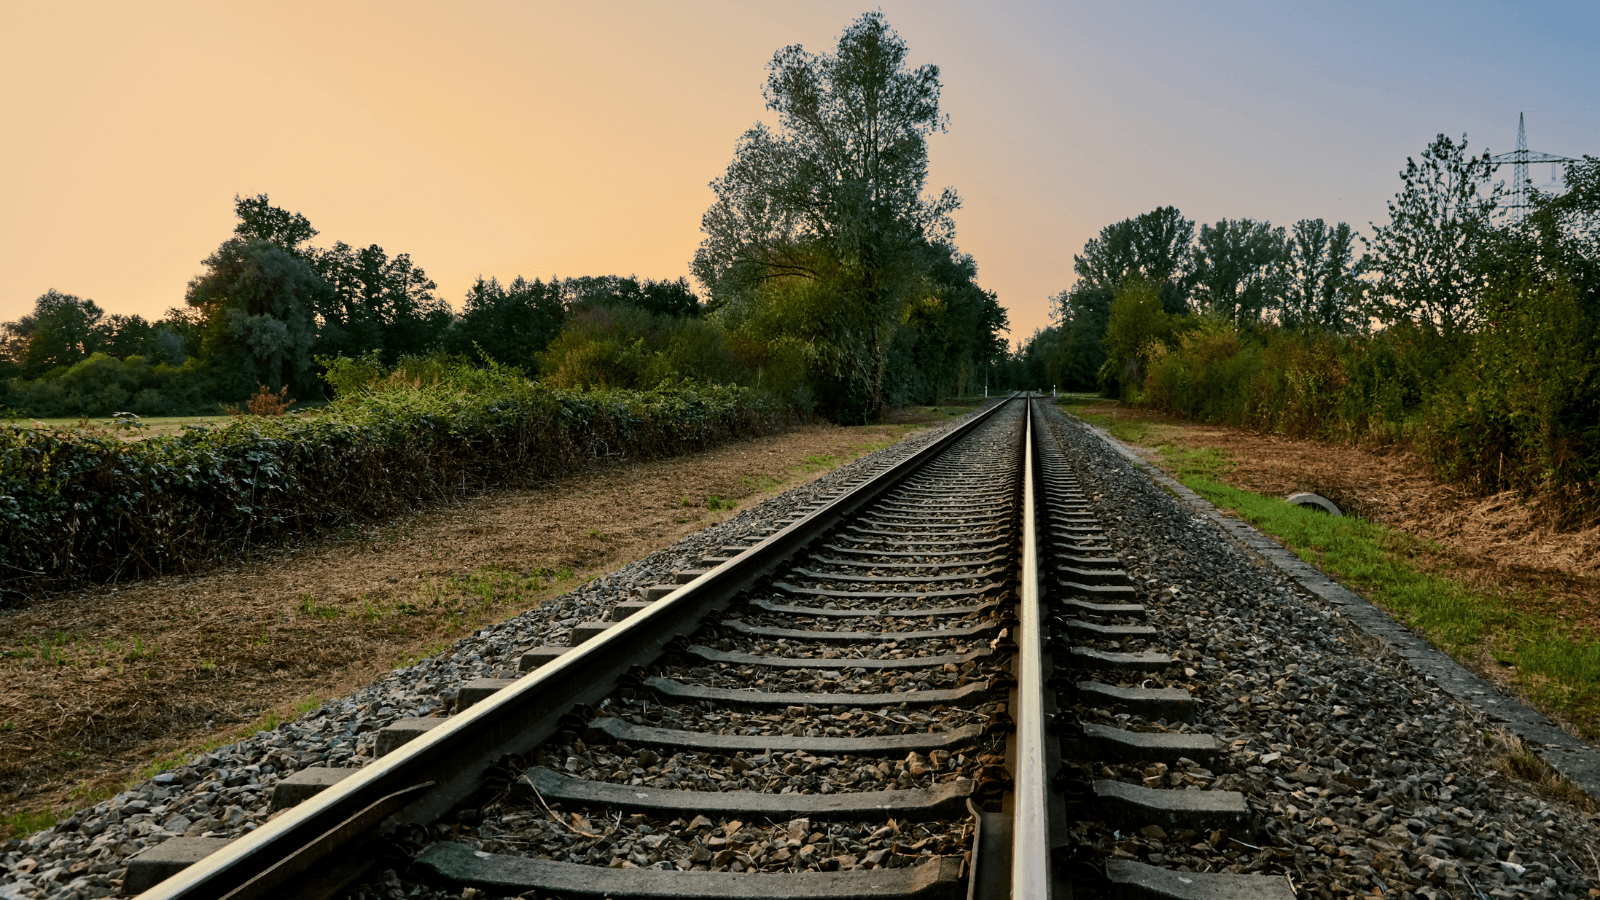 How Christians Can Respond to the Ohio Train Derailment